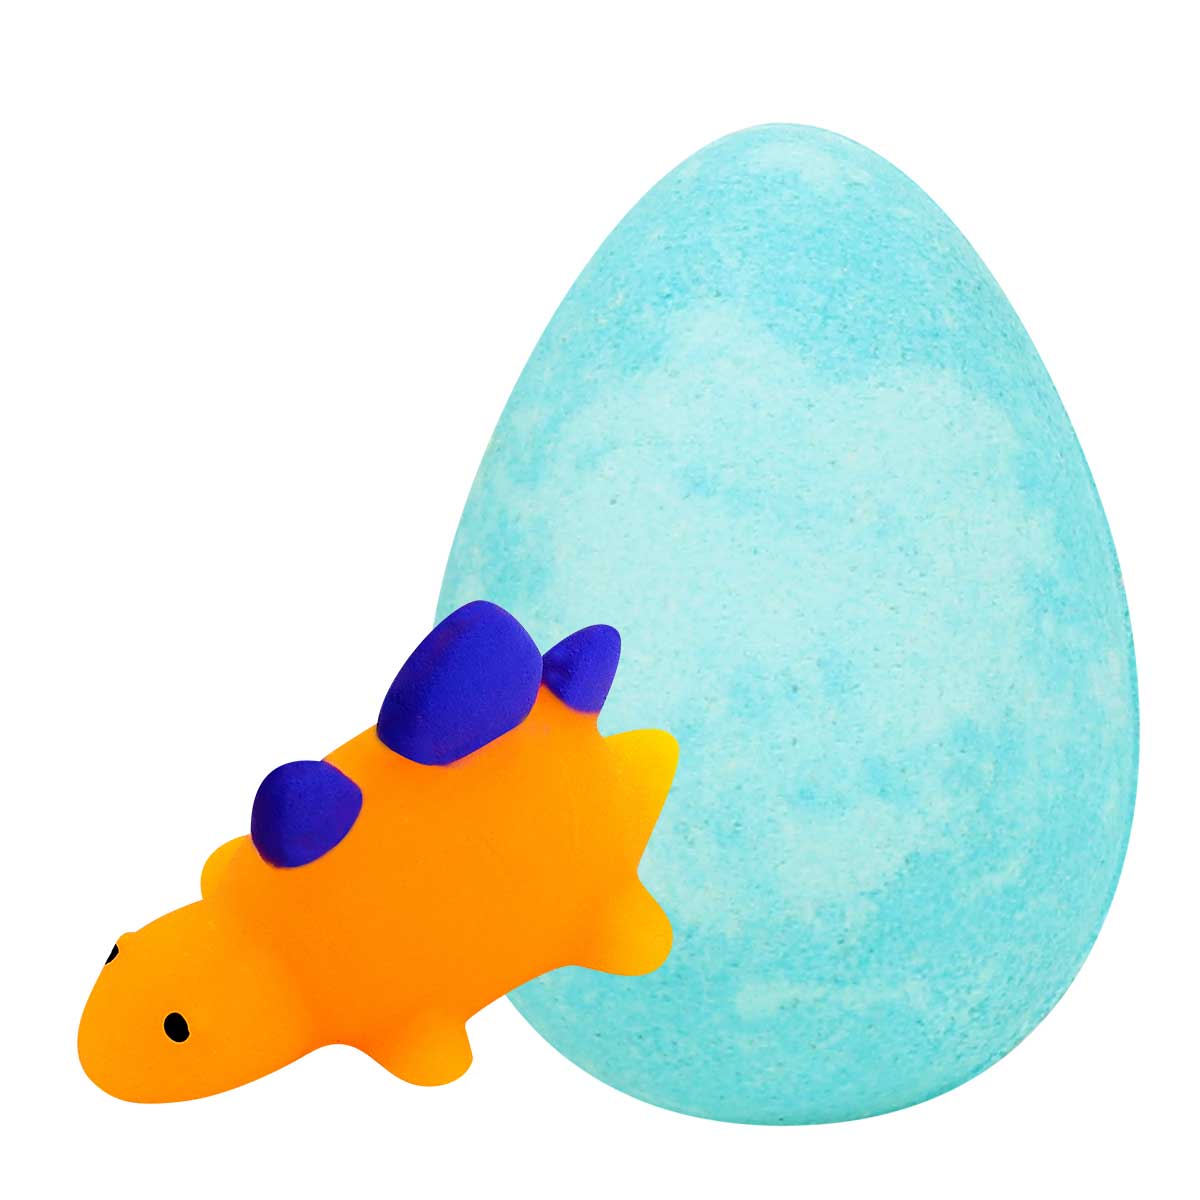 Vegan Dino Egg Surprise Bath Bombs - Displayer of 6